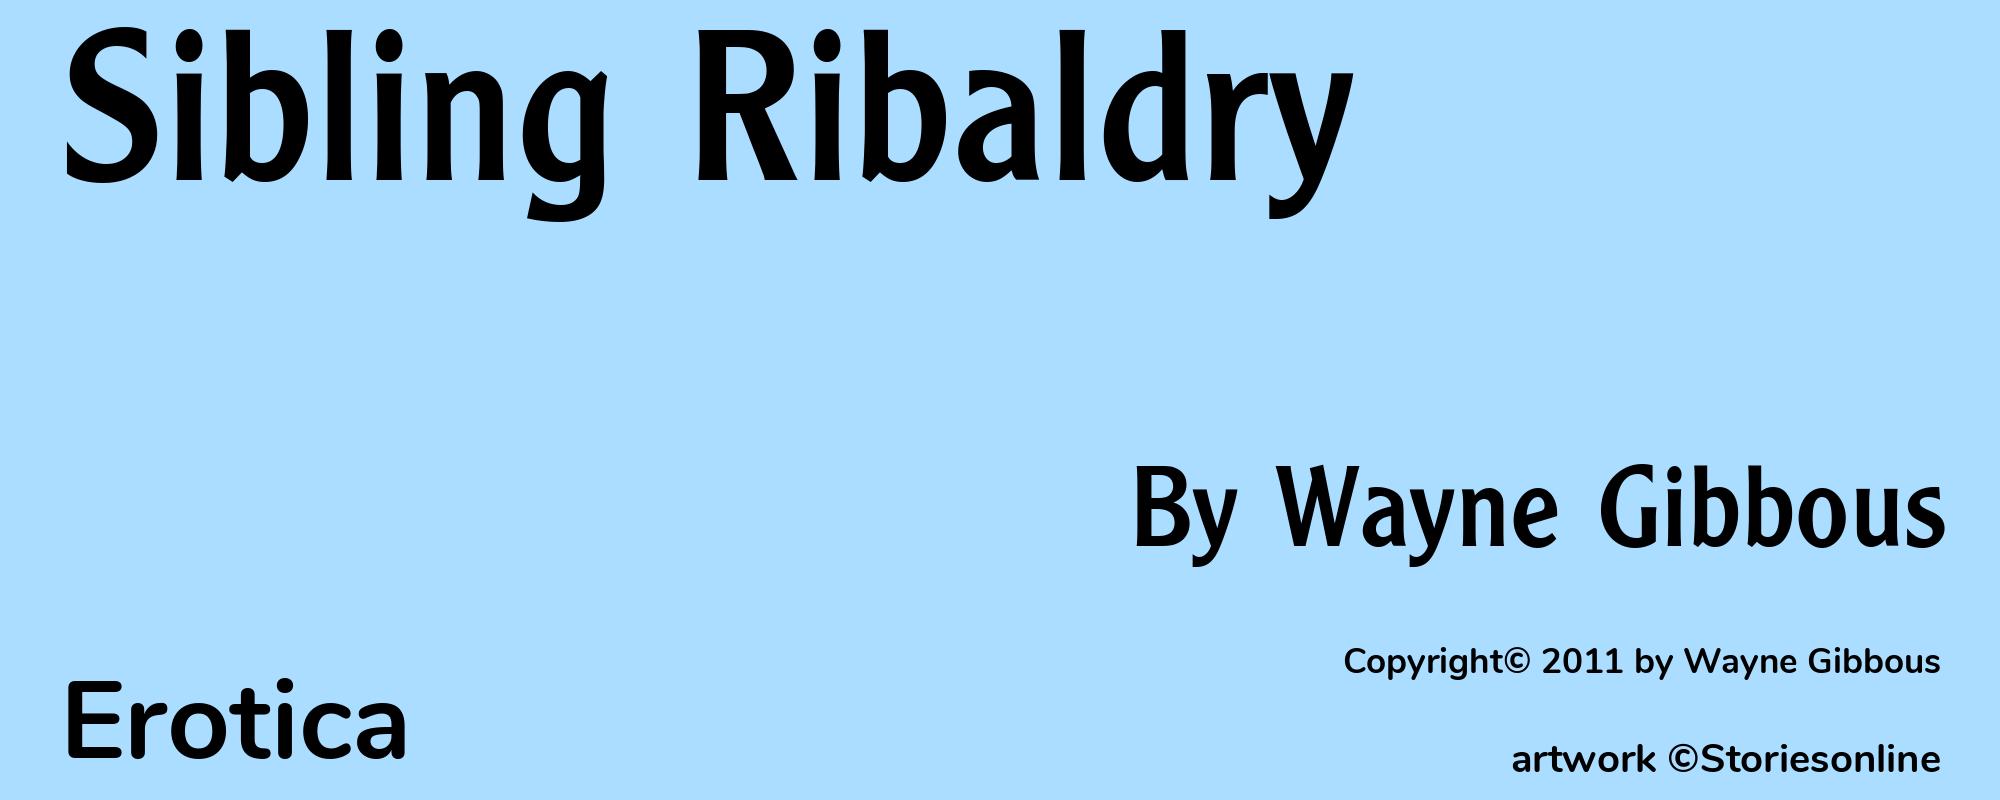 Sibling Ribaldry - Cover